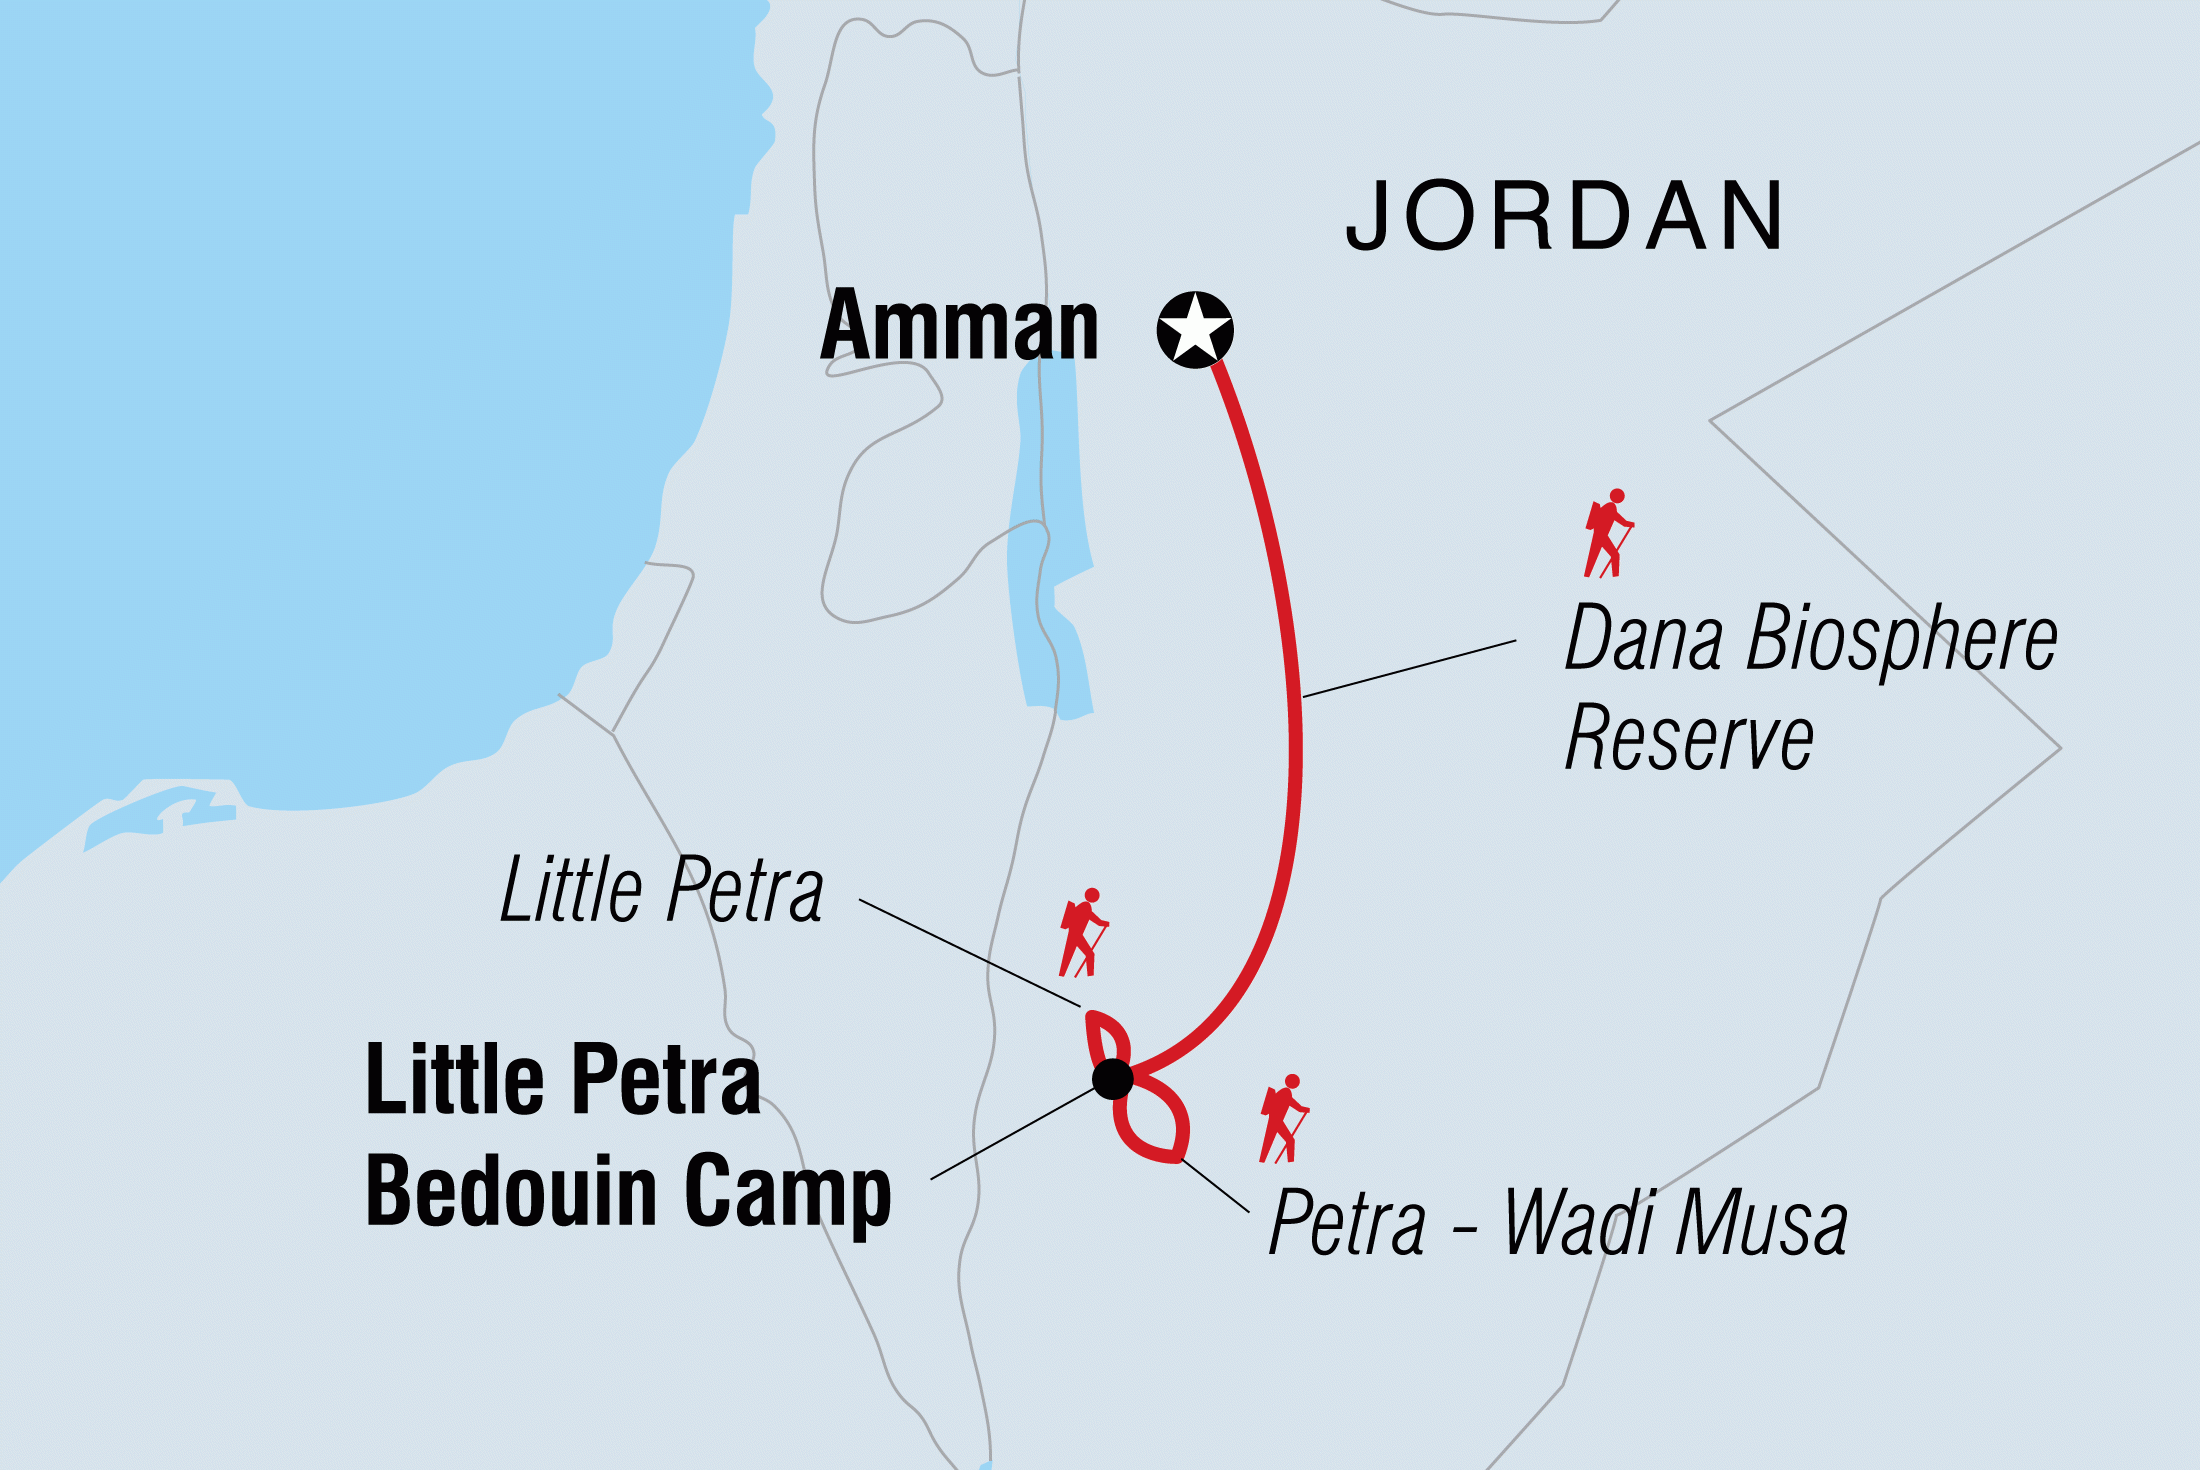 jordan travel itinerary 4 days